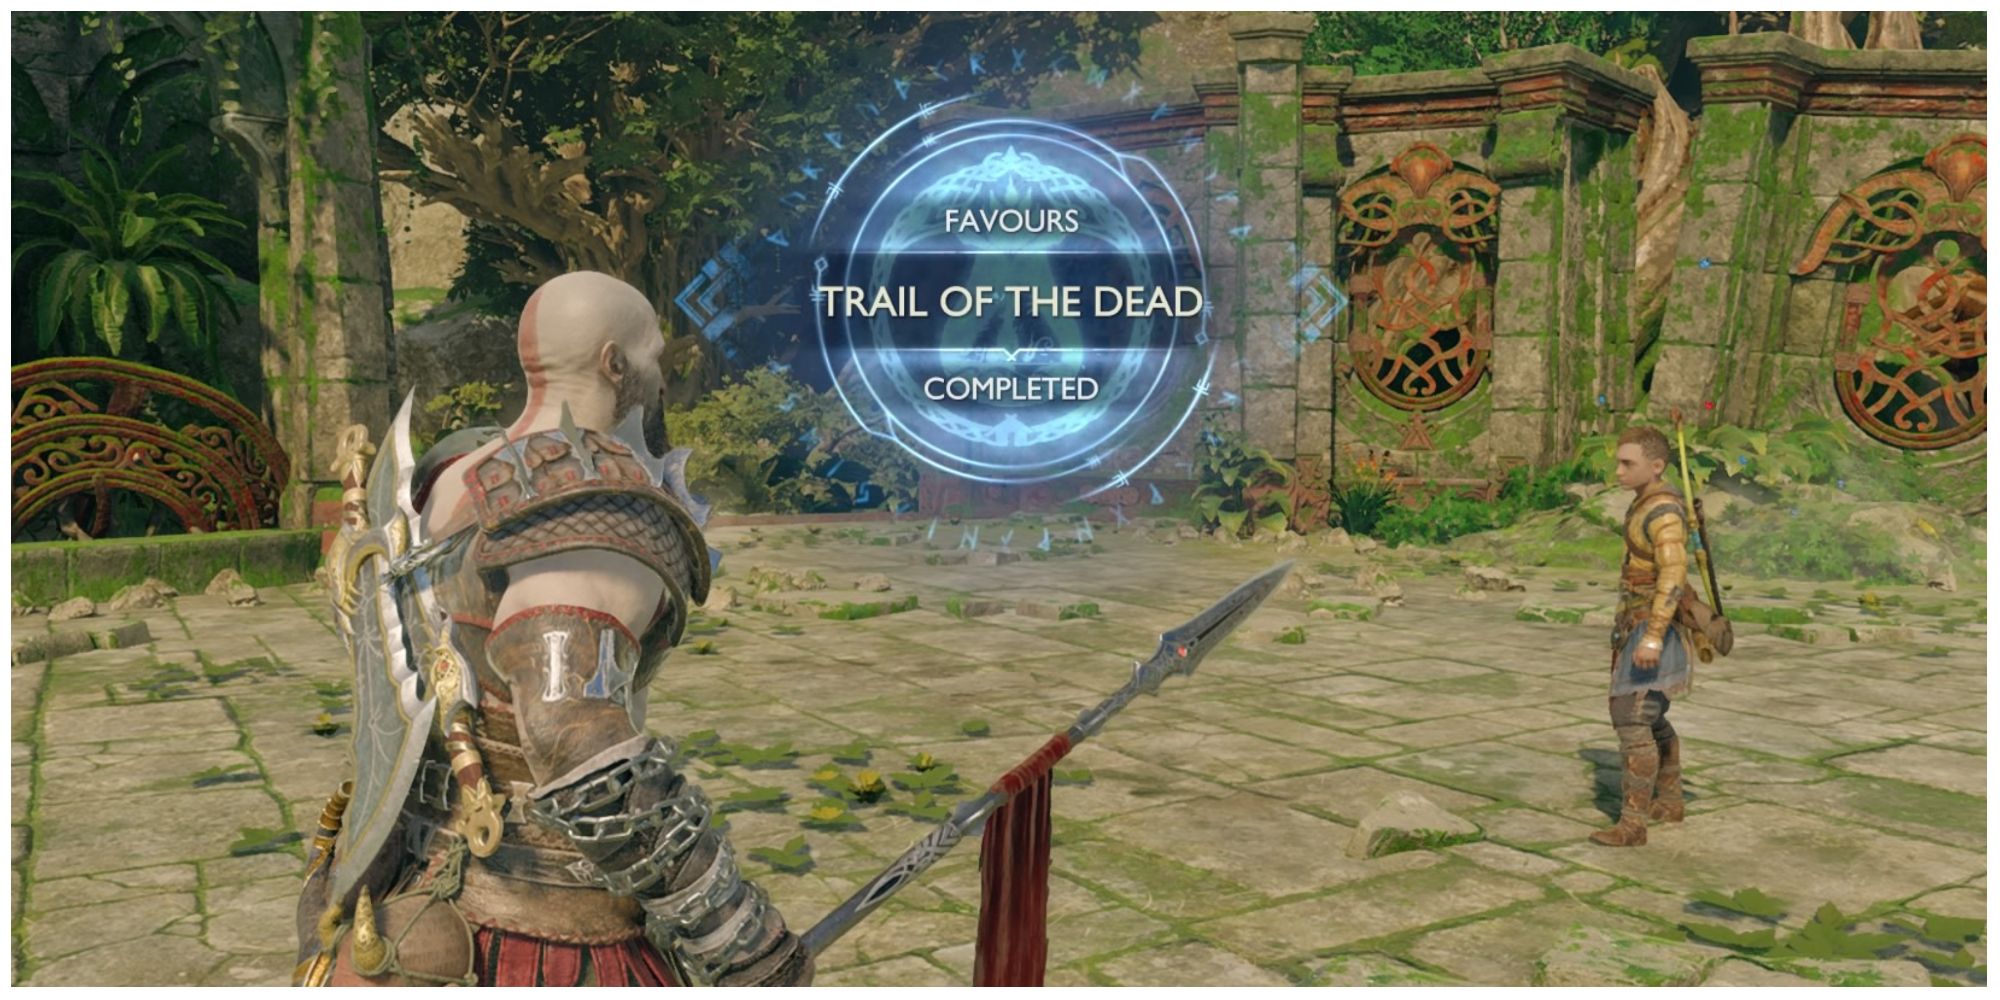 Kratos completes the Trail of the Dead Favor in God of War Ragnarok